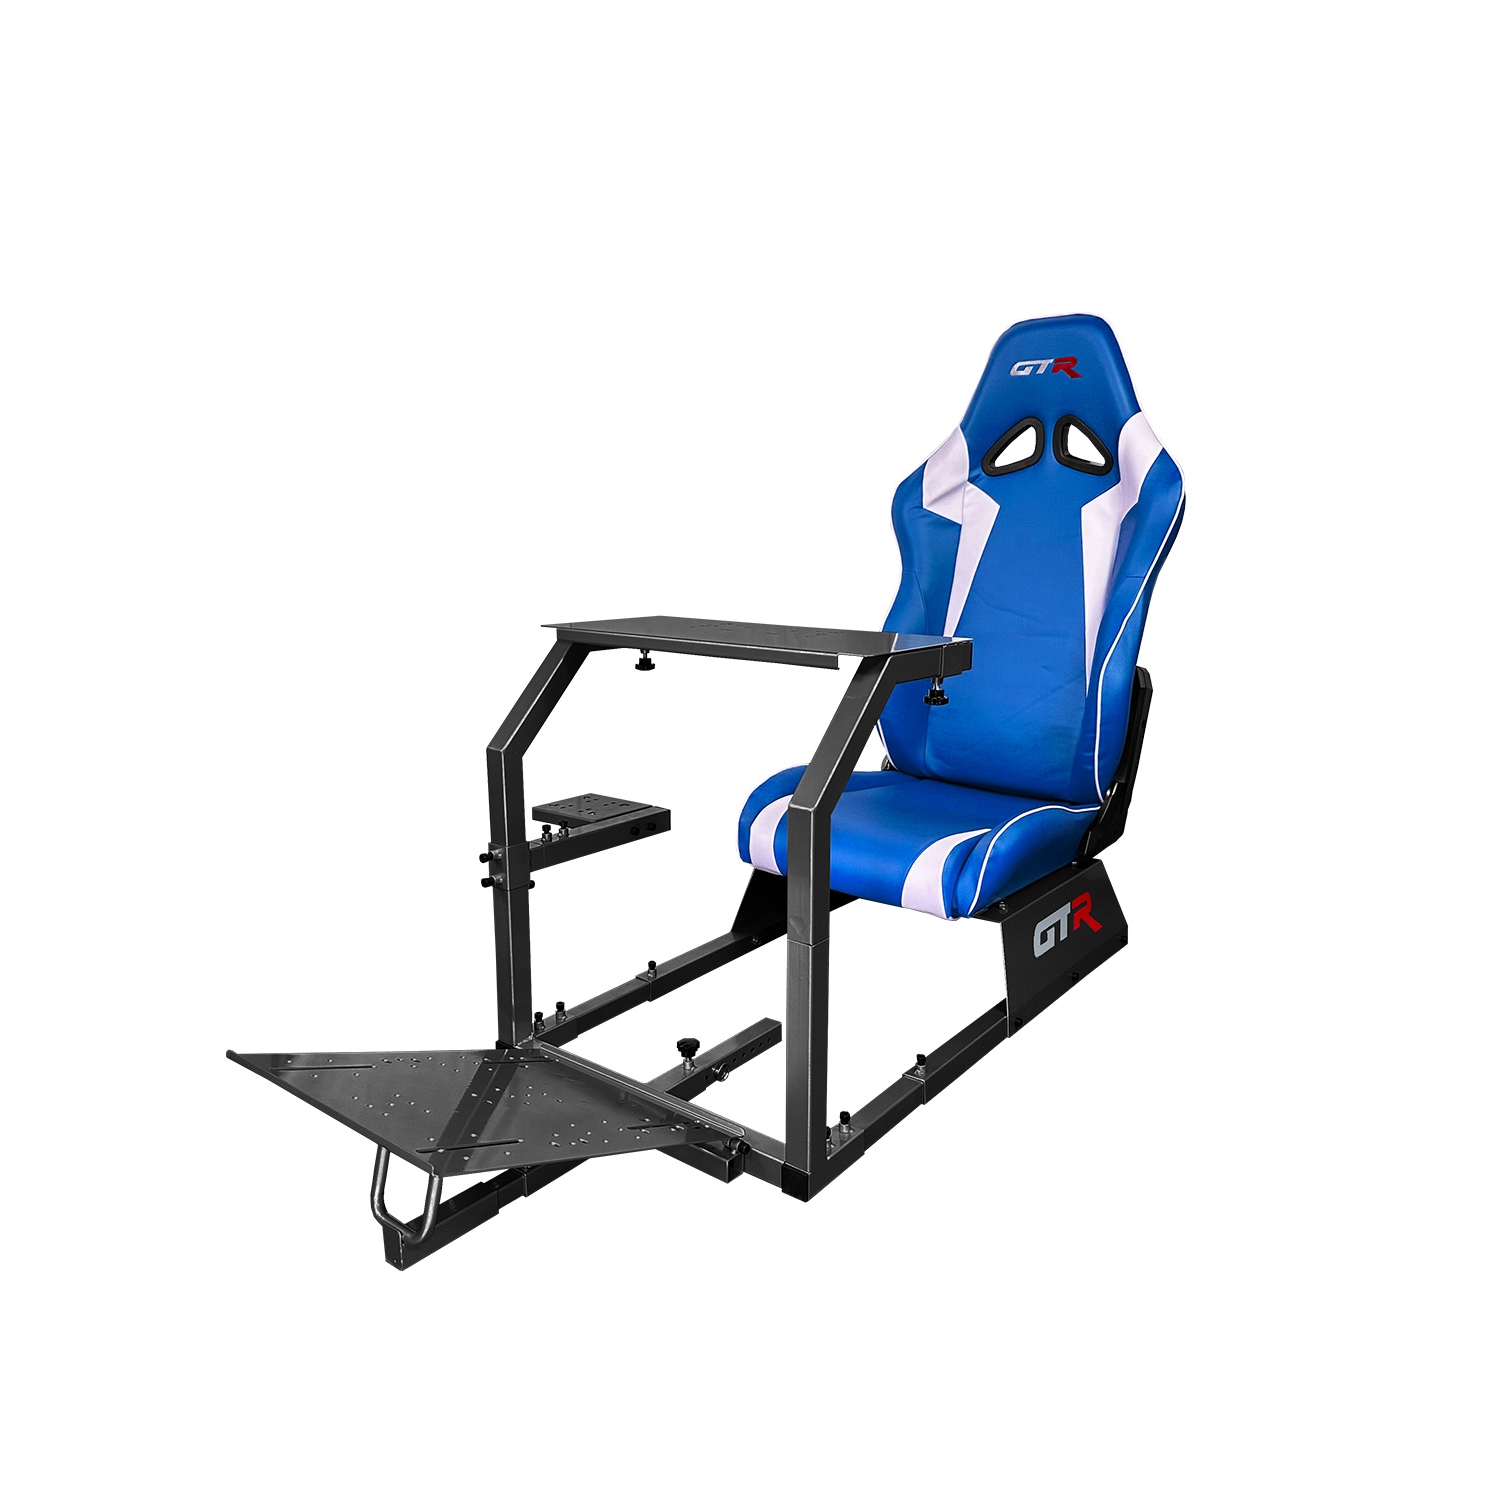 GTR Simulator GTA Model Black Frame with Blue/White Real Racing Seat